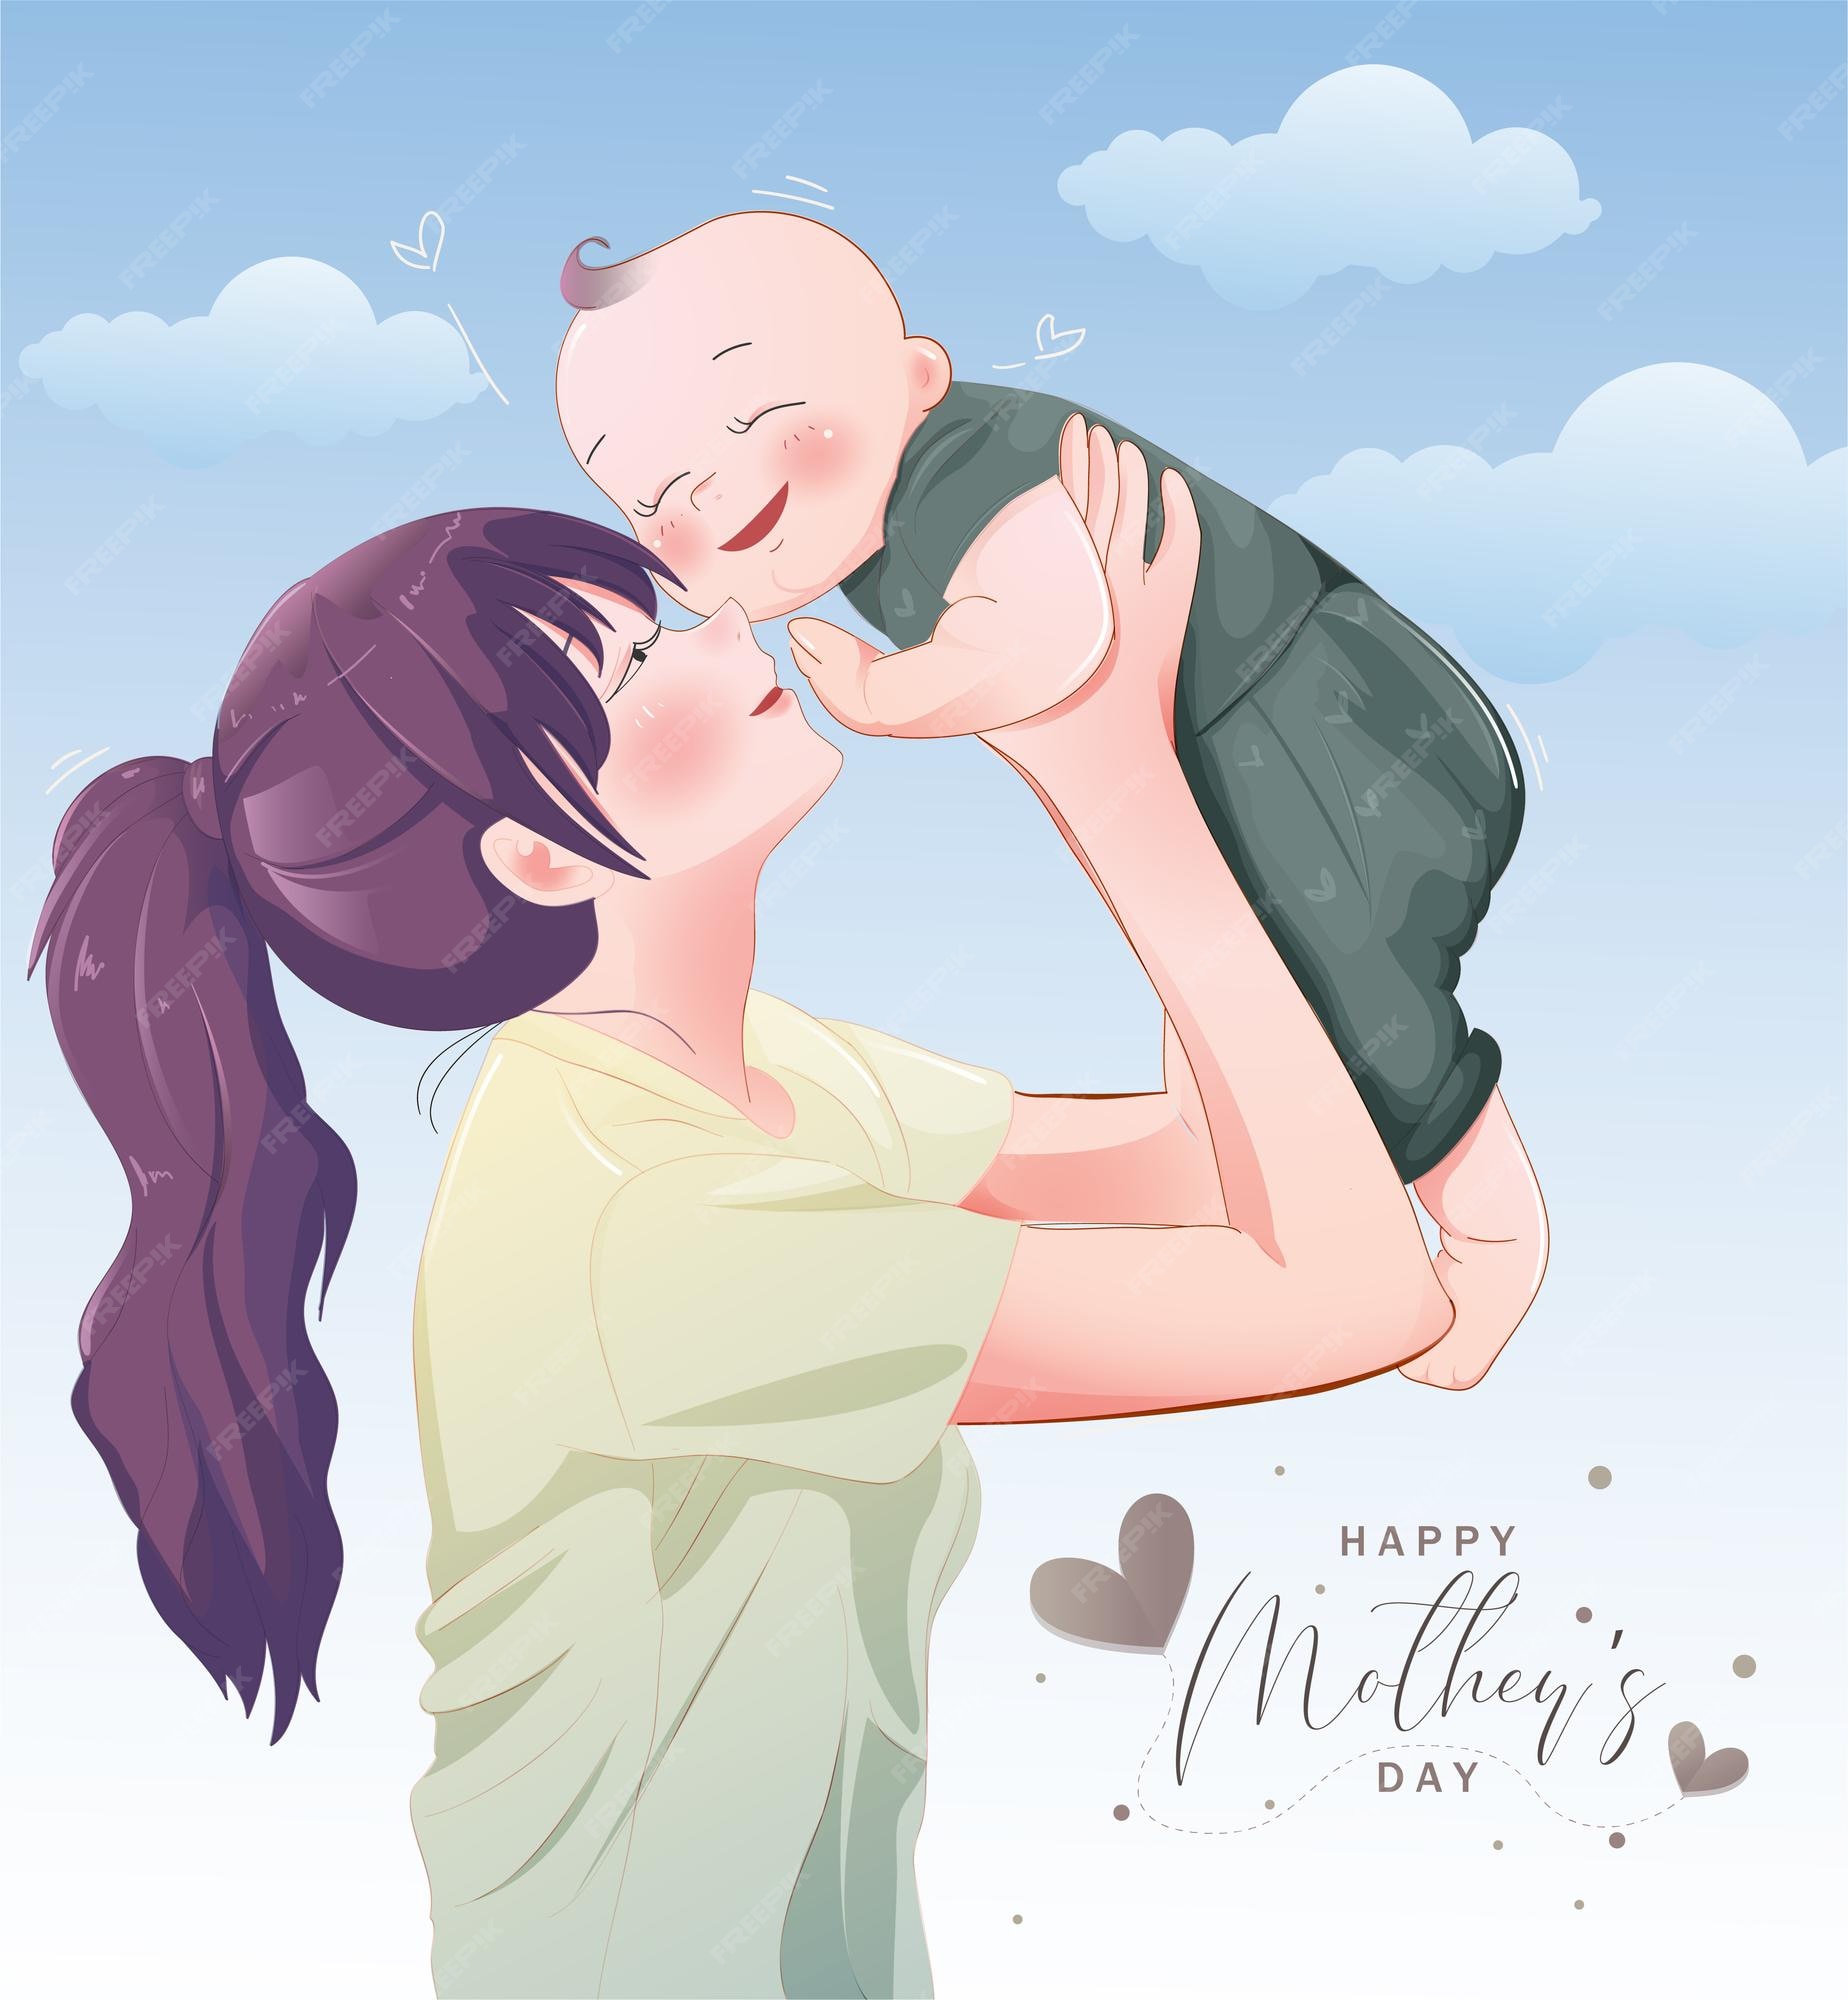 cheshta kapoor share anime mother and baby photos